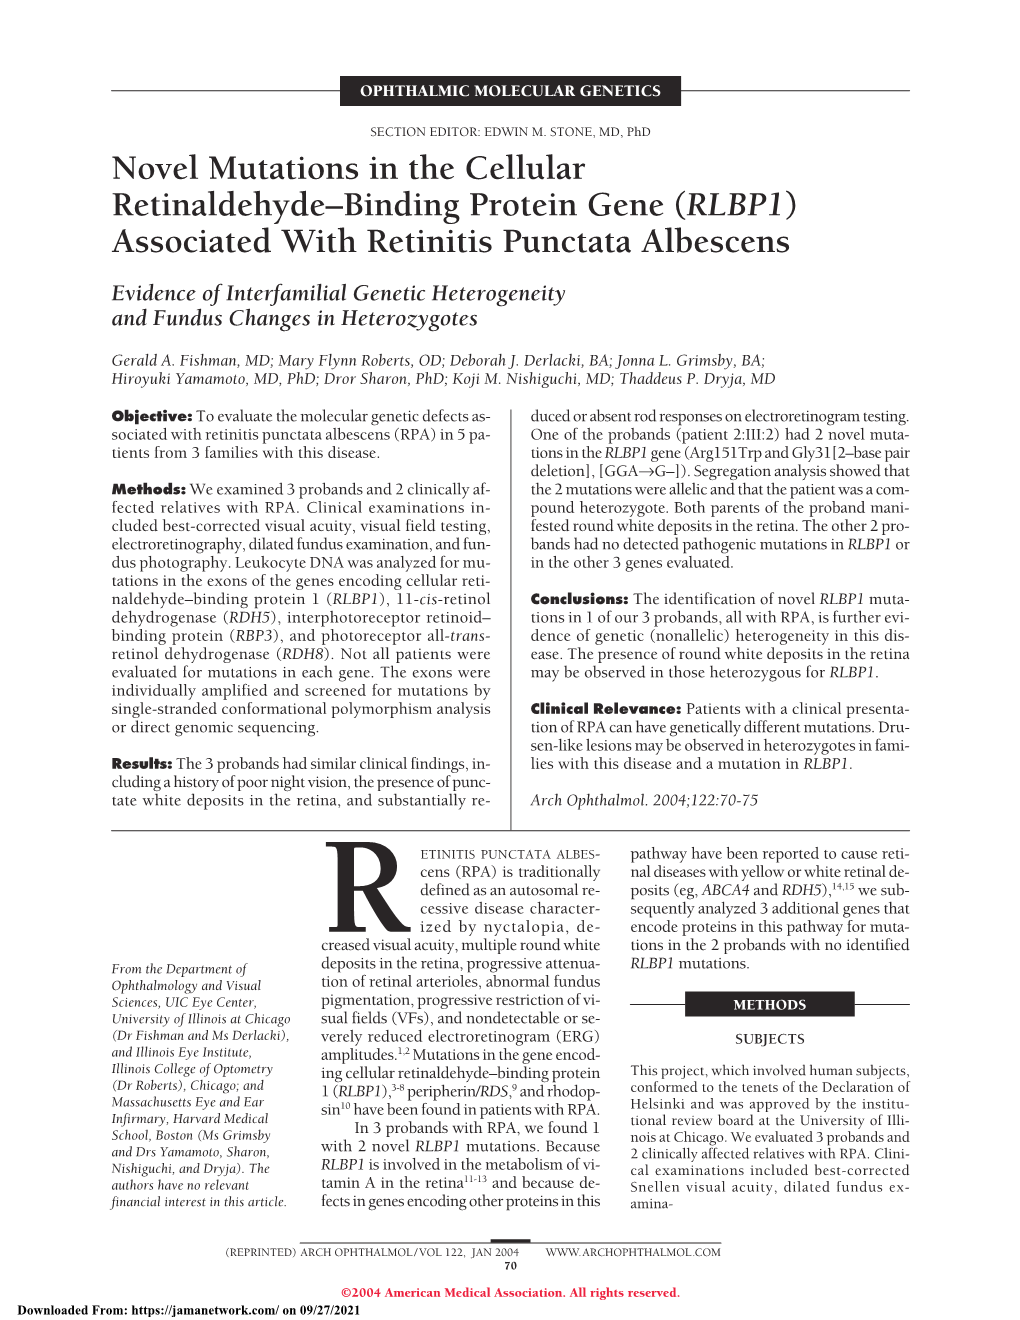 (RLBP1) Associated with Retinitis Punctata Albescens Evidence of Interfamilial Genetic Heterogeneity and Fundus Changes in Heterozygotes